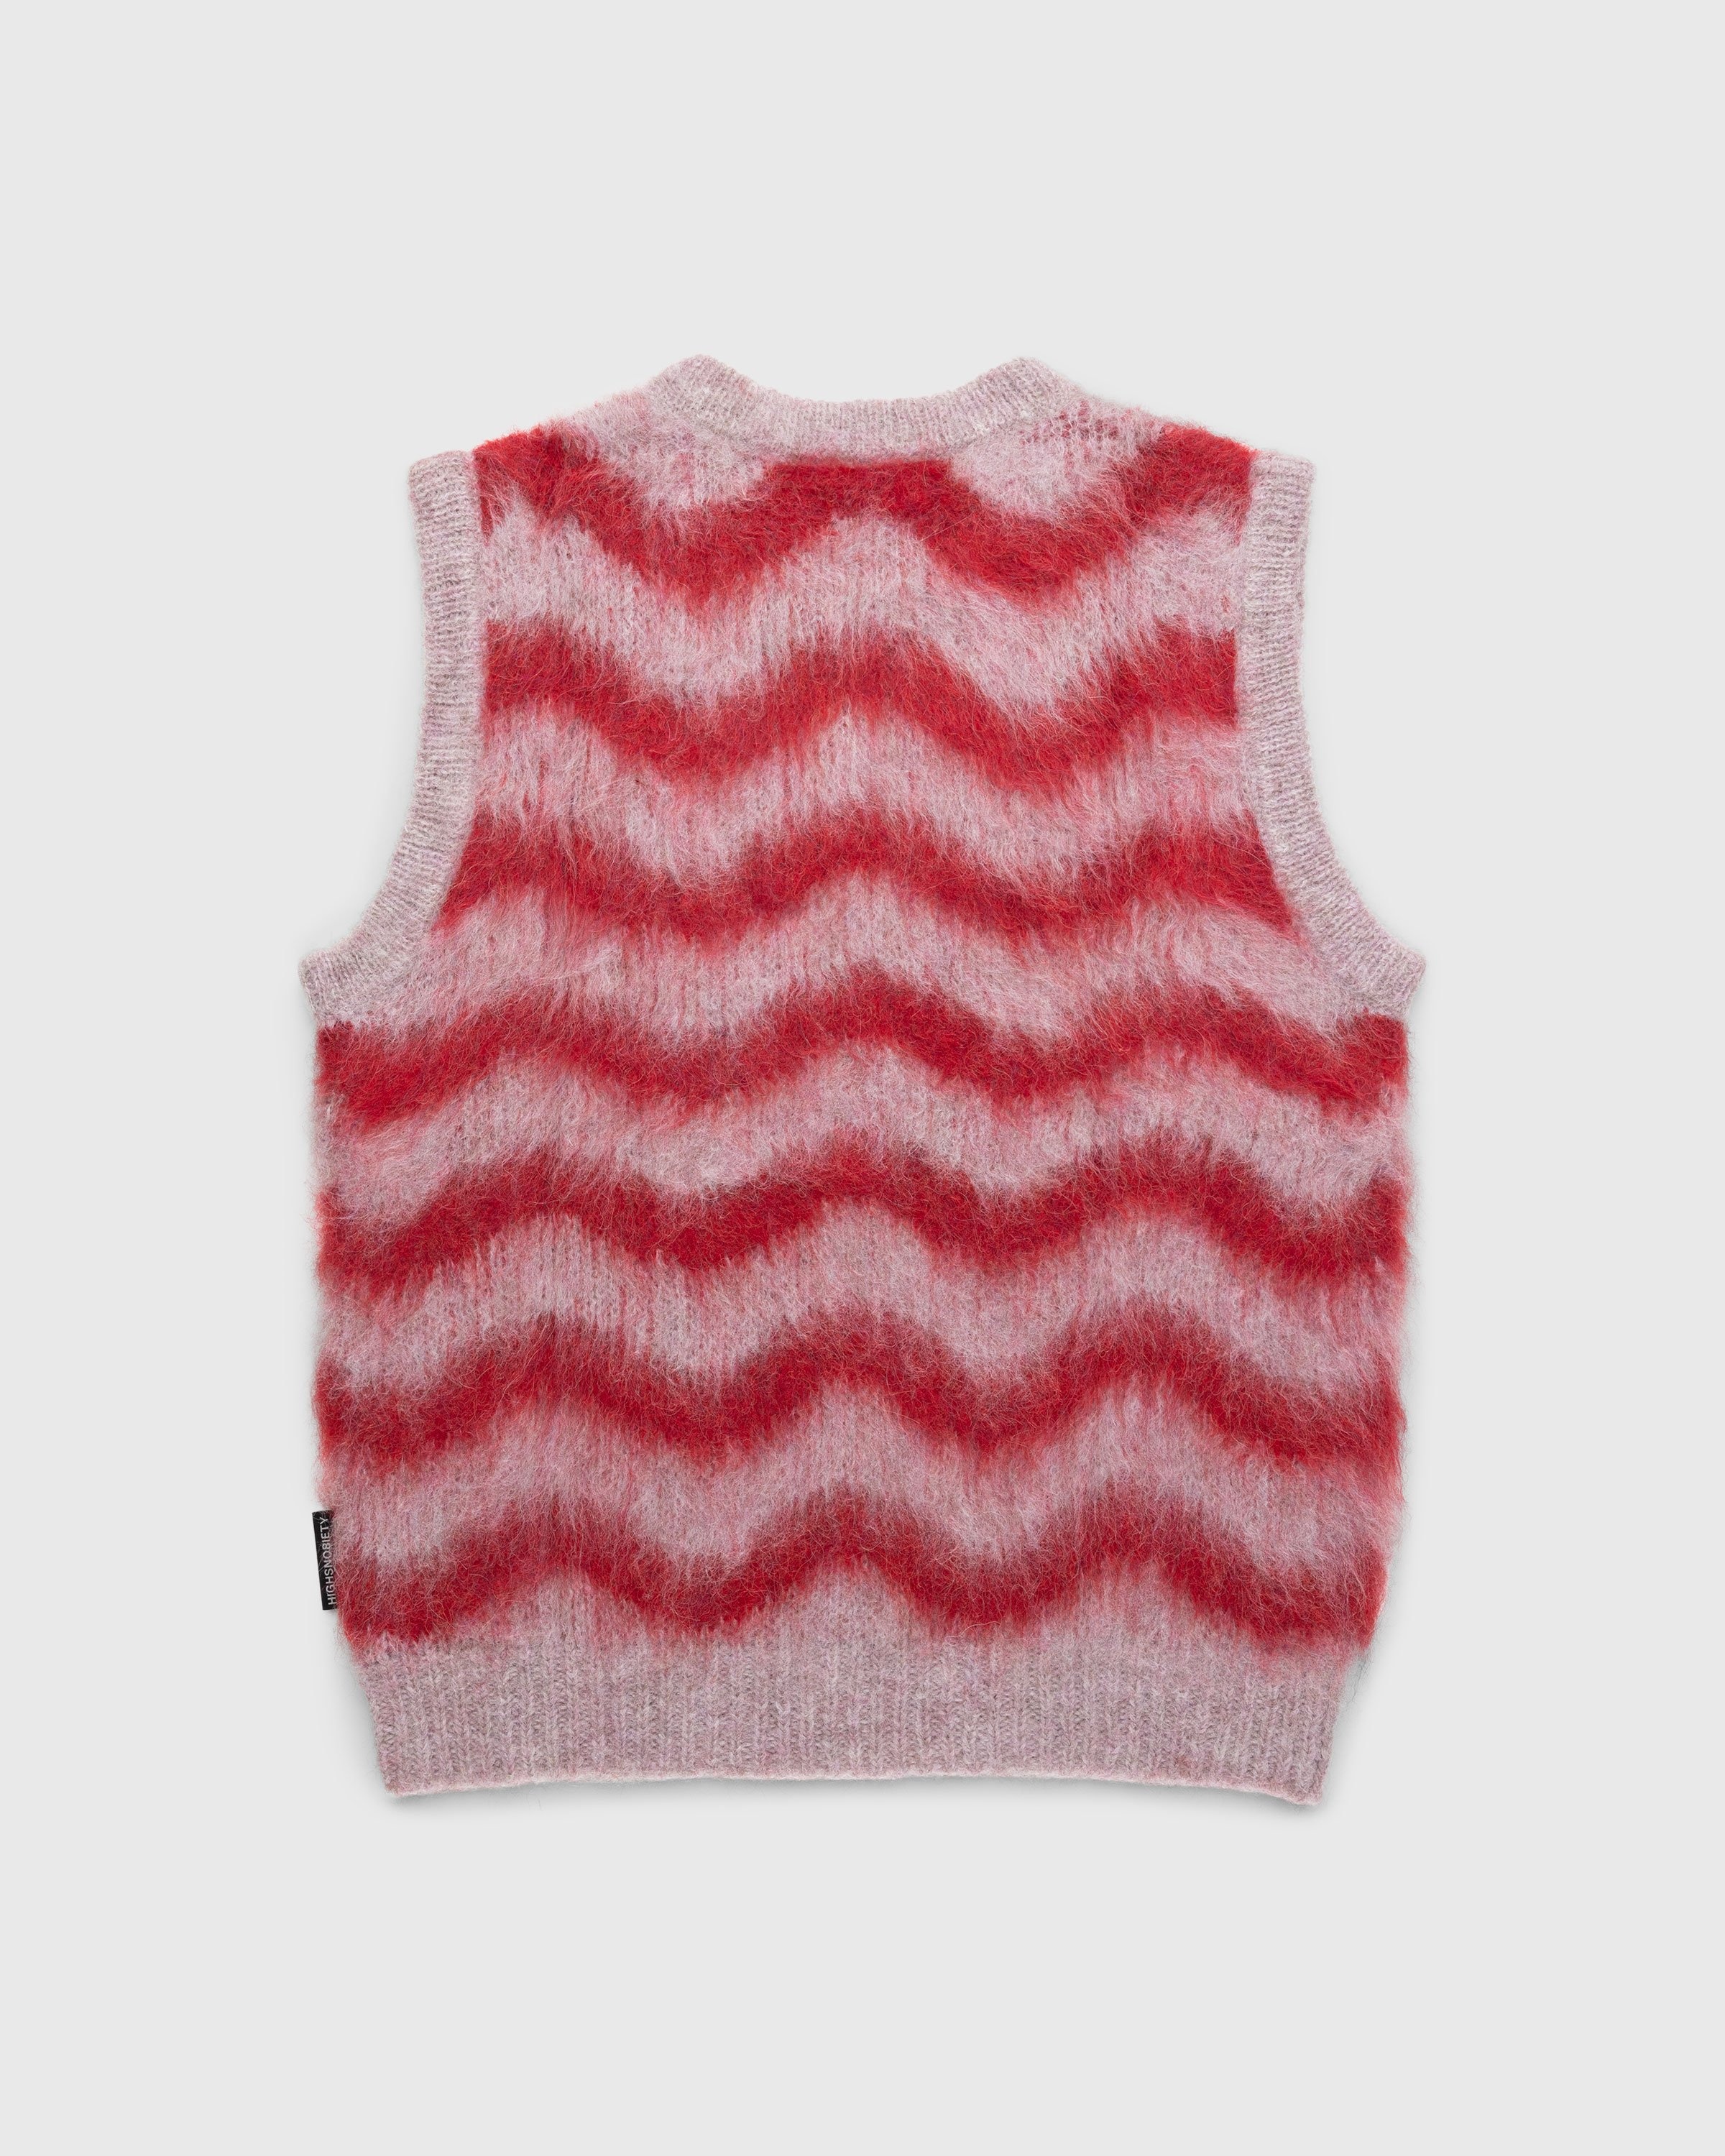 Highsnobiety HS05 – Alpaca Fuzzy Wave Sweater Vest Pale Rose/Red - Knitwear - Multi - Image 2